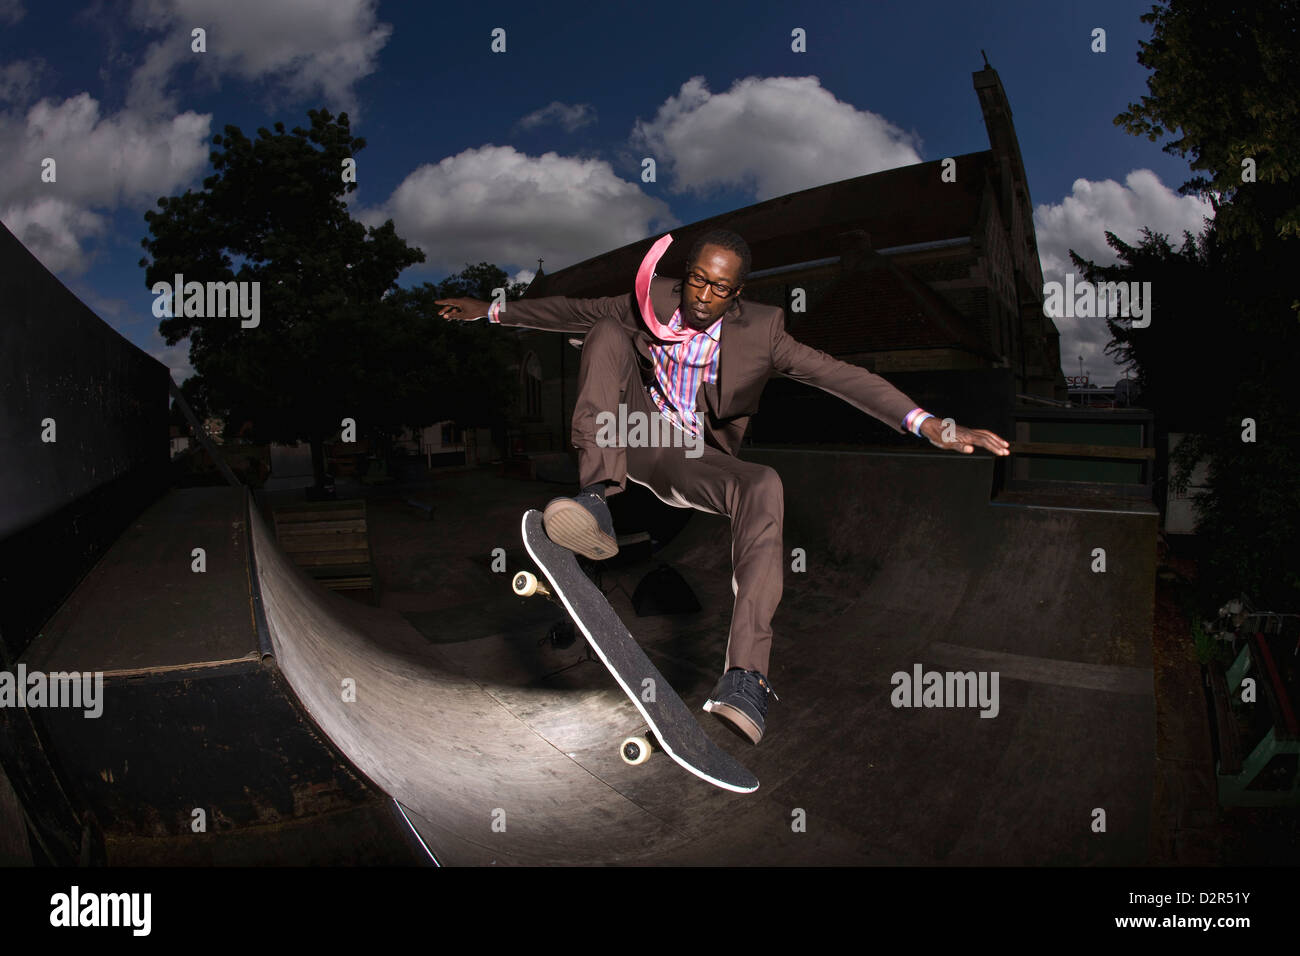 Guidatore di skateboard in tuta sulla rampa, metà azione aria stunt Foto Stock